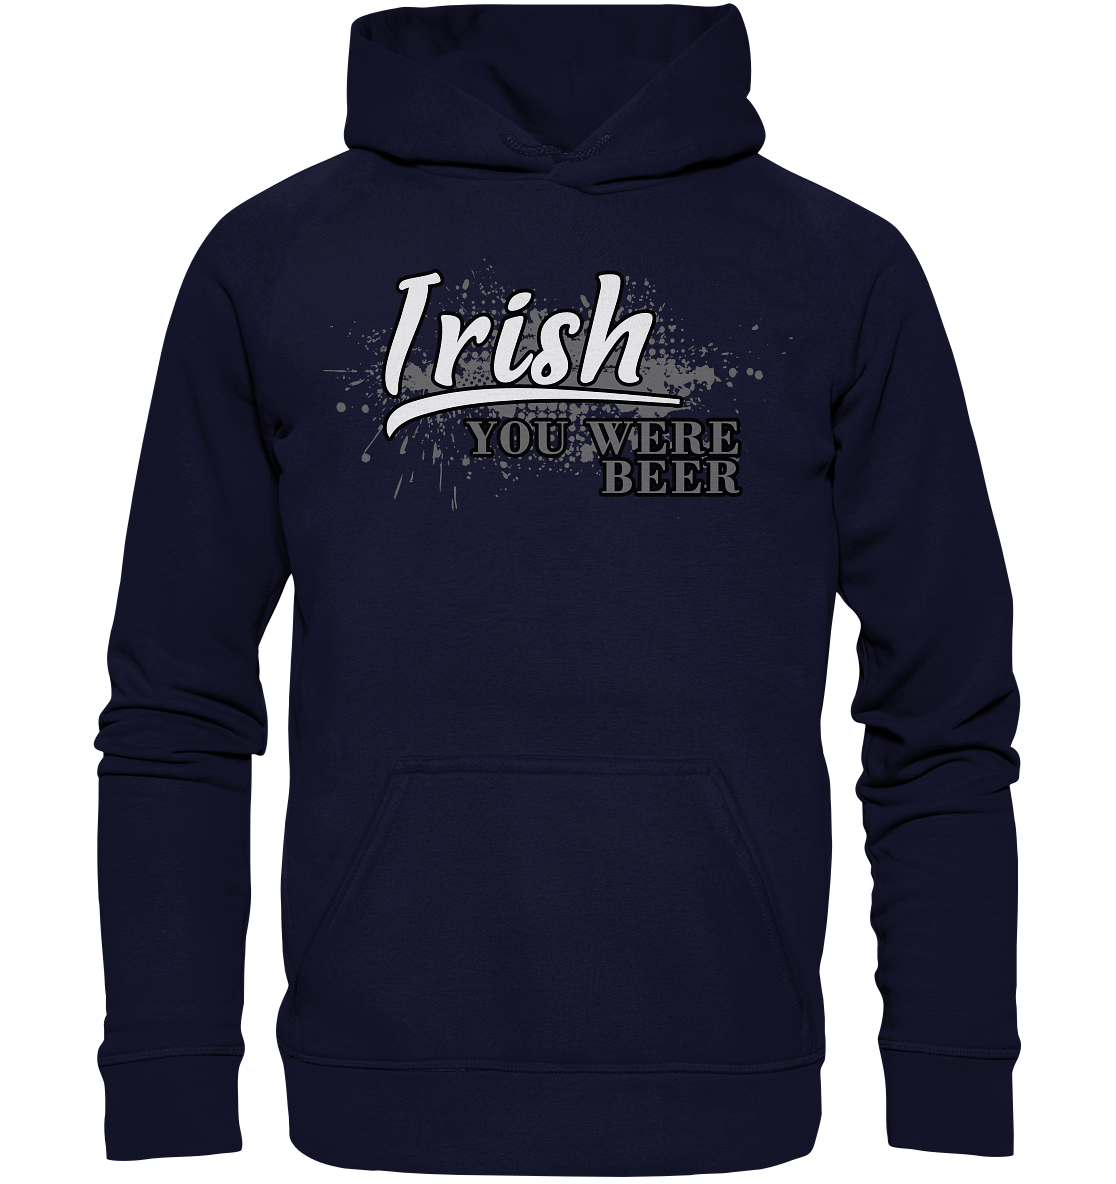 Irish "You Were Beer" - Basic Unisex Hoodie